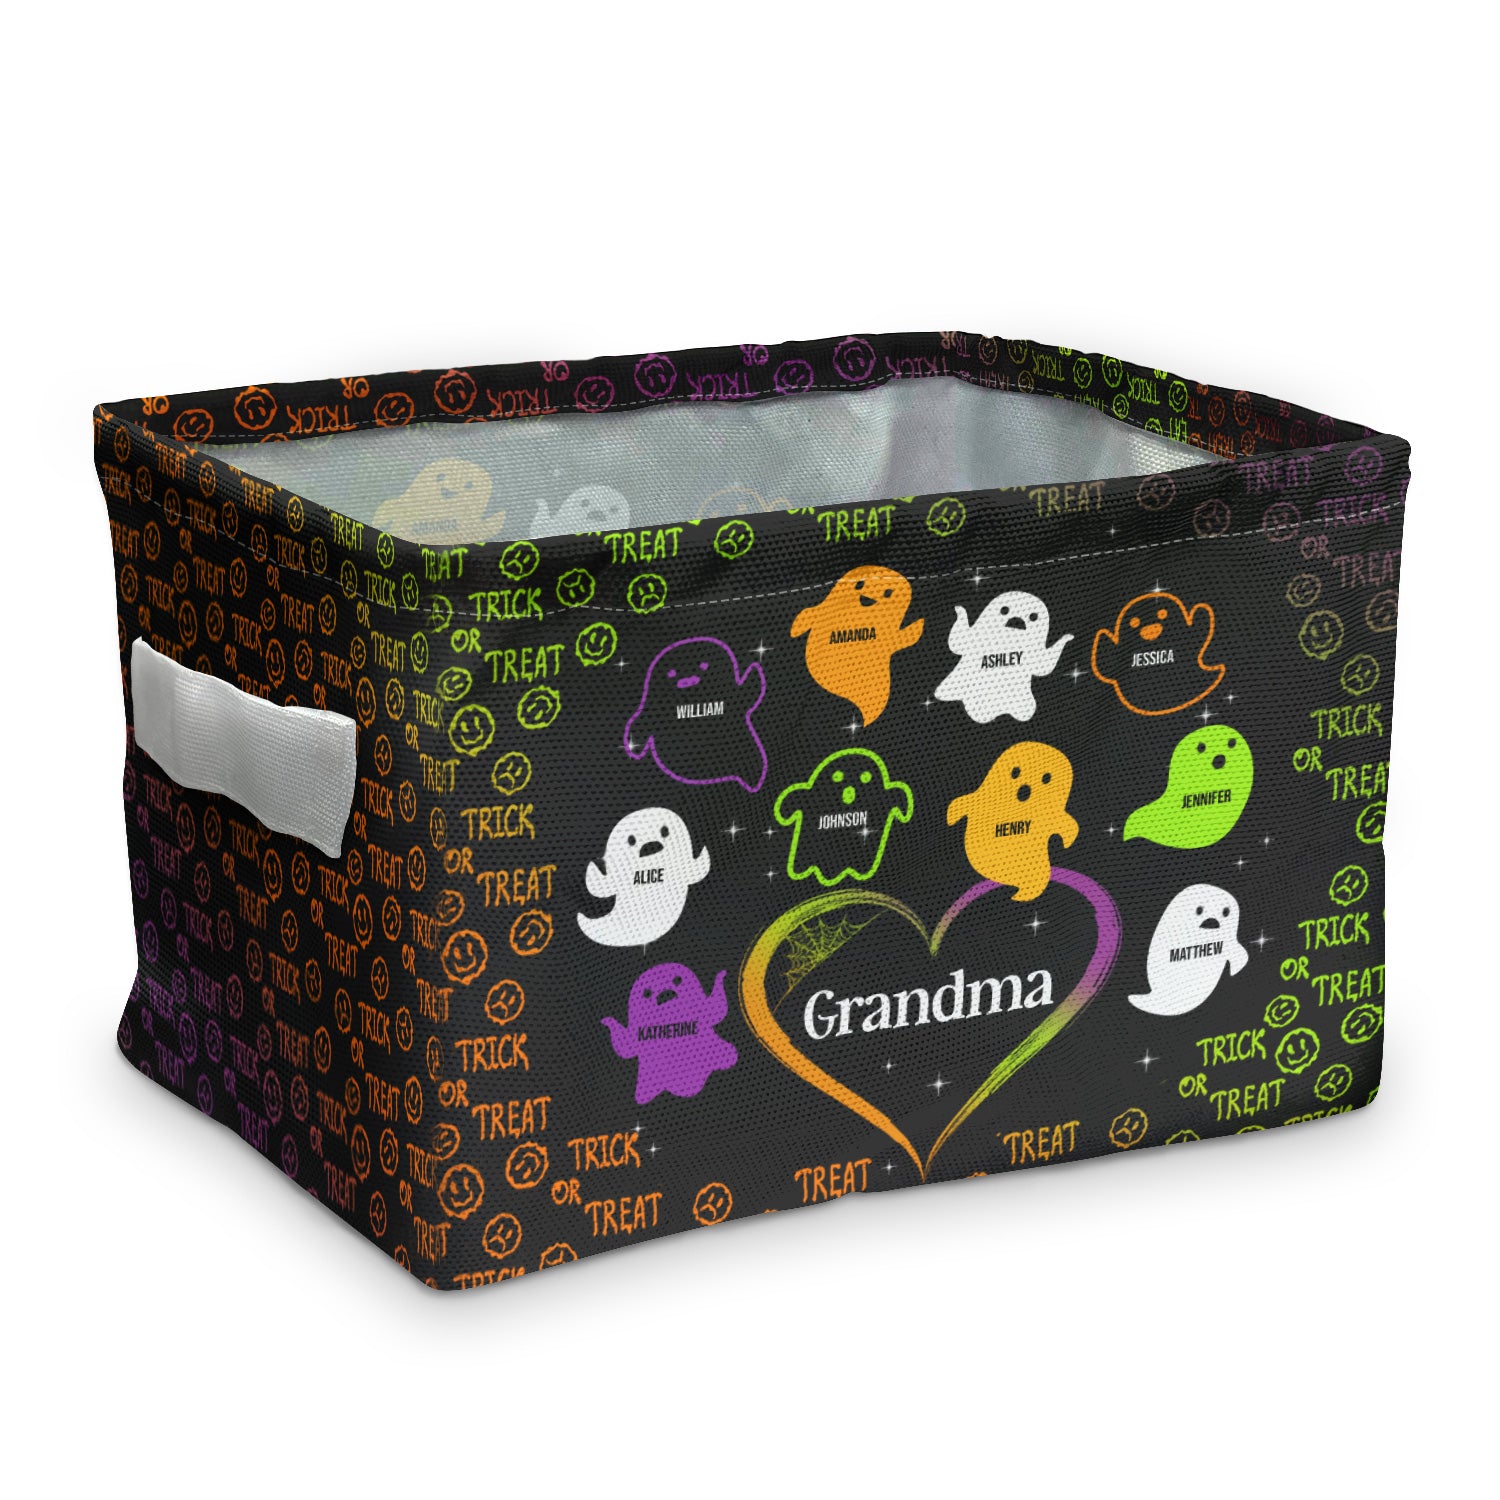 Grandma Trick Treat - Gift For Grandma - Personalized Storage Box